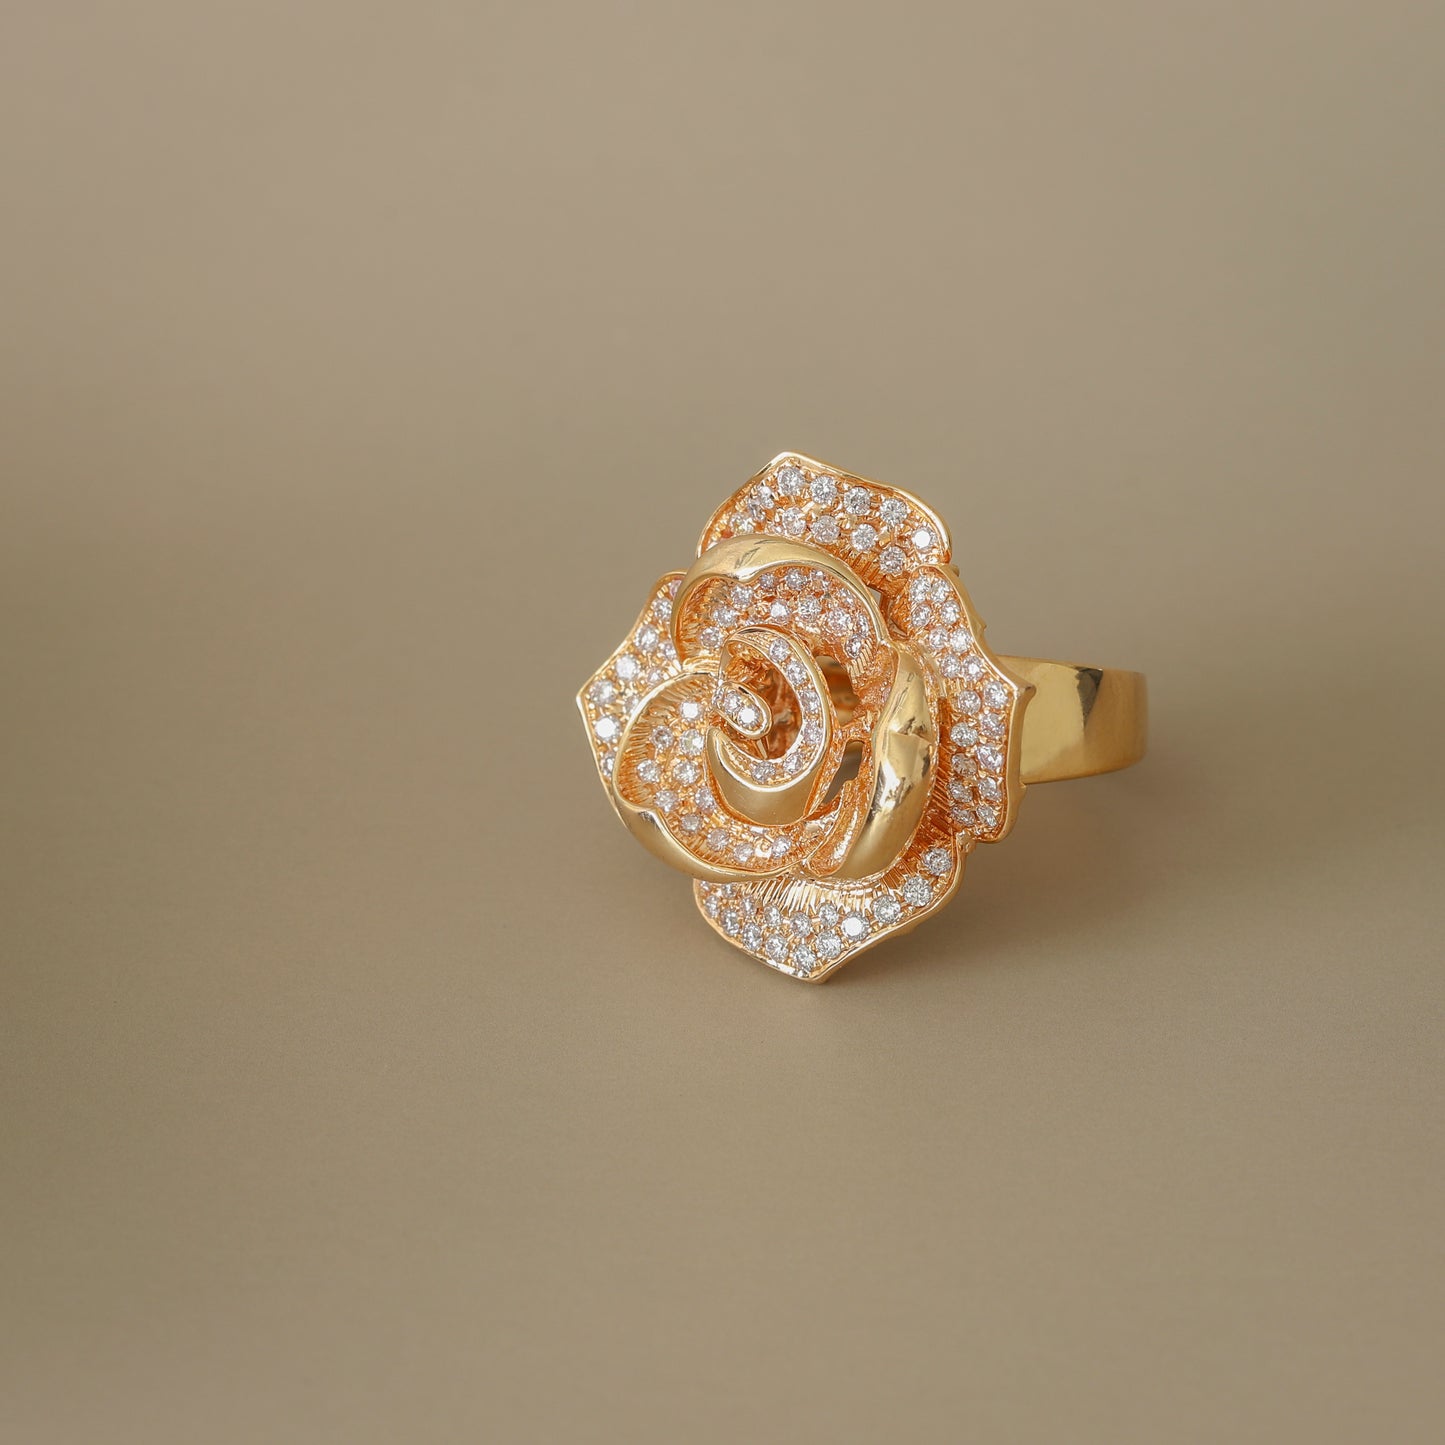 18k Rose Gold Diamond Rose Statement Ring - Romantic Floral Design - Size 8